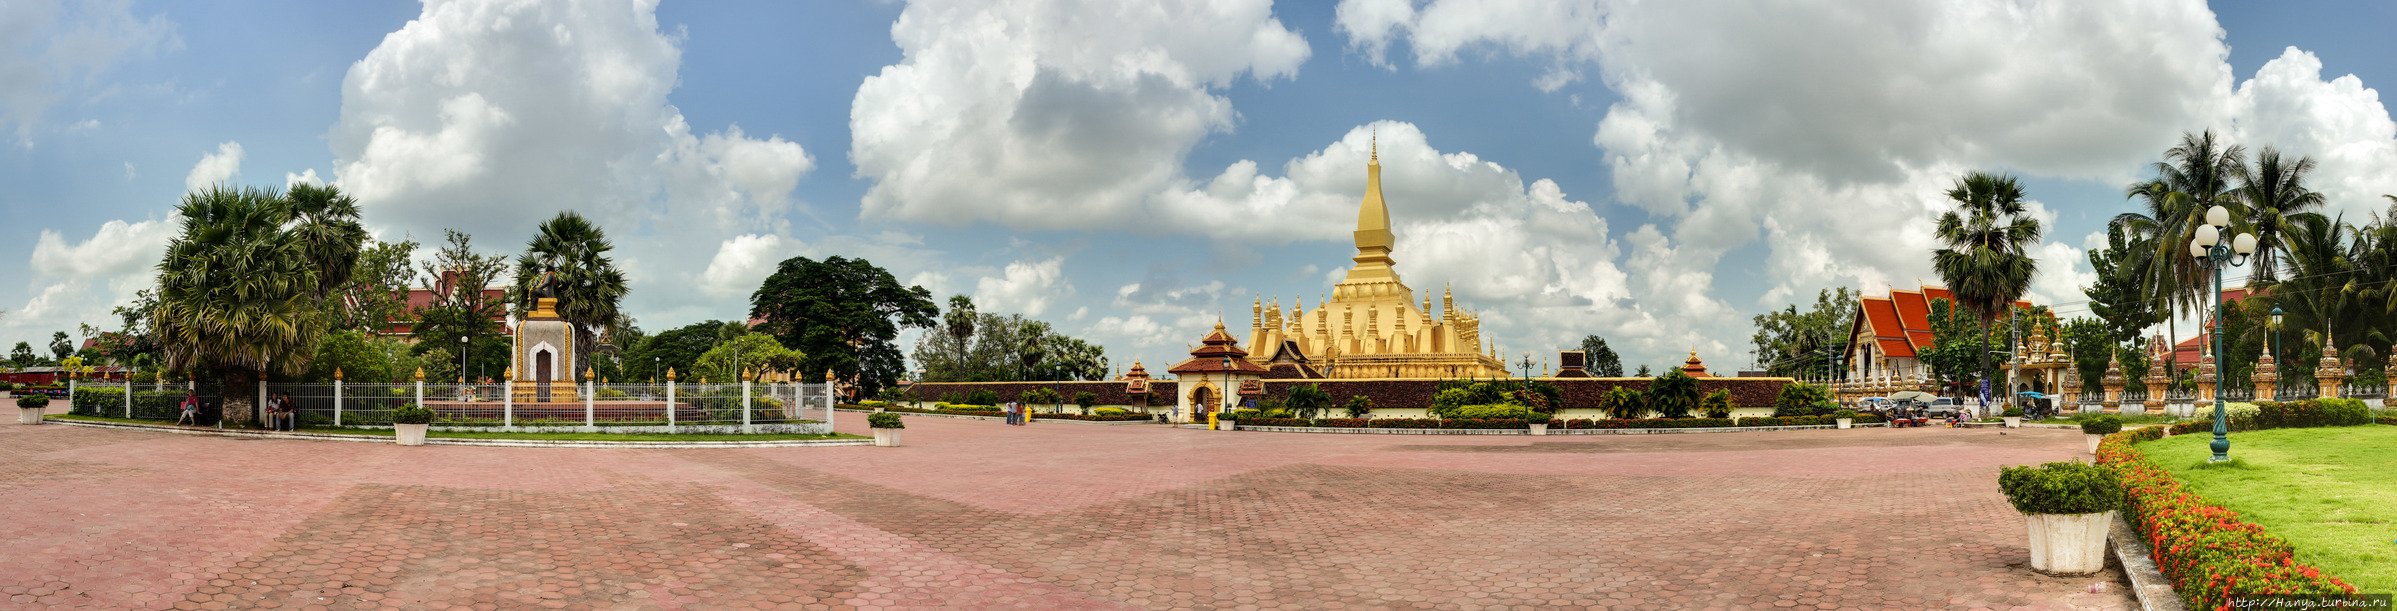 Ват Тхат Луанг. Фото из интернета Вьентьян, Лаос